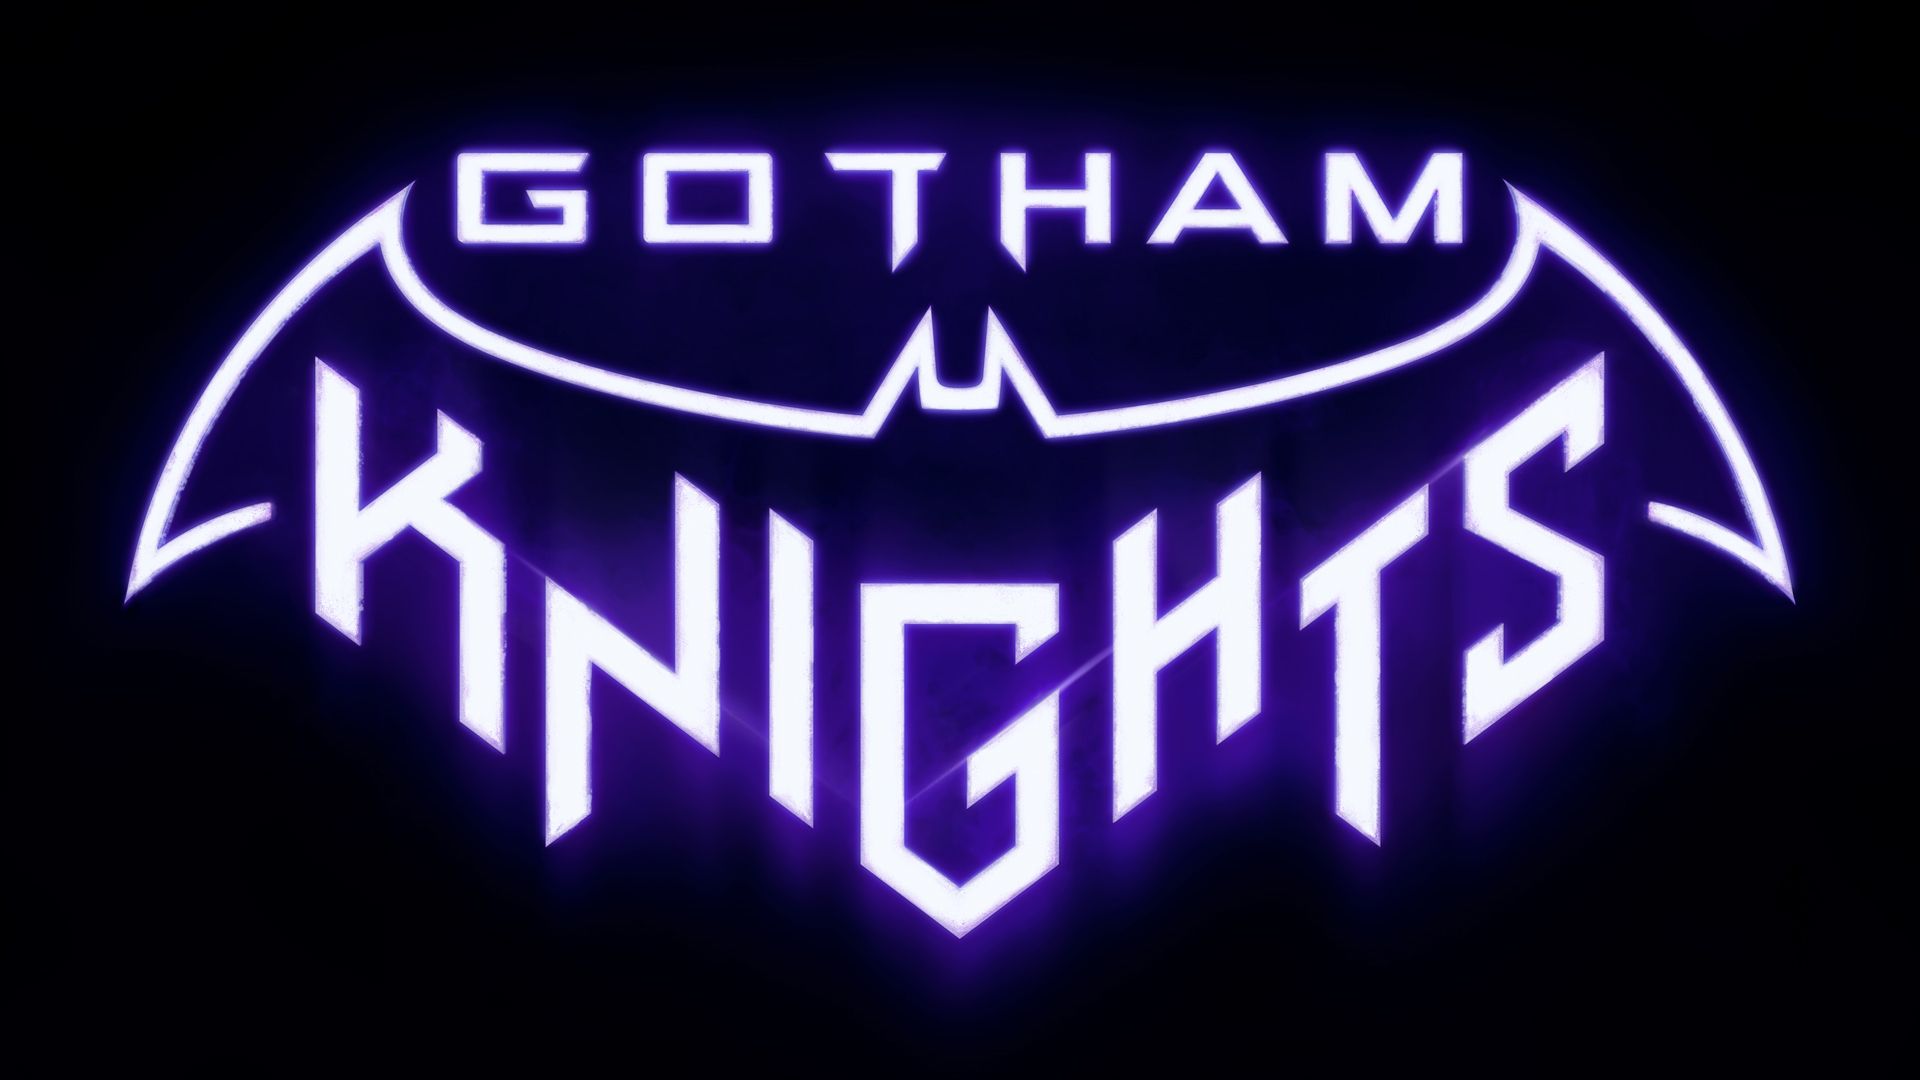 download gotham knights steam for free